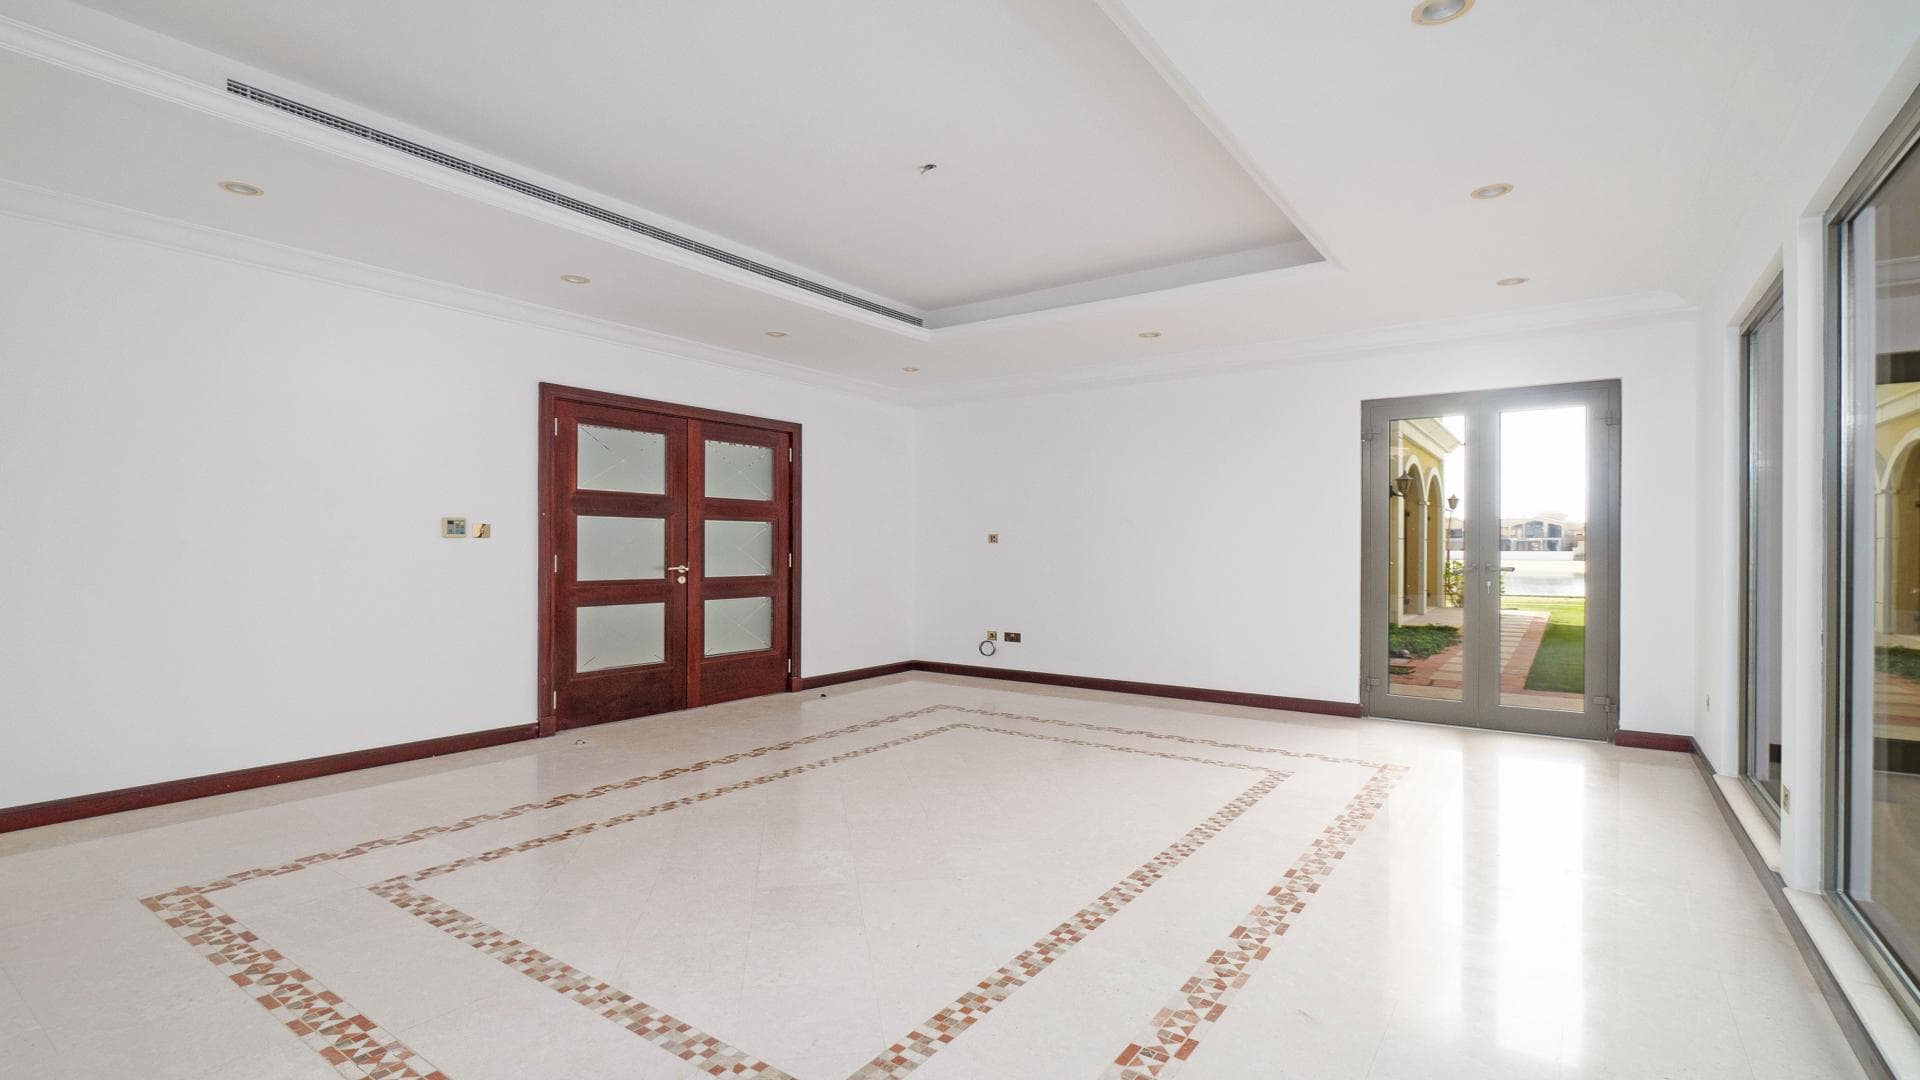 5 Bedroom Villa For Sale Mughal Lp36445 1b21a493079b0600.jpg